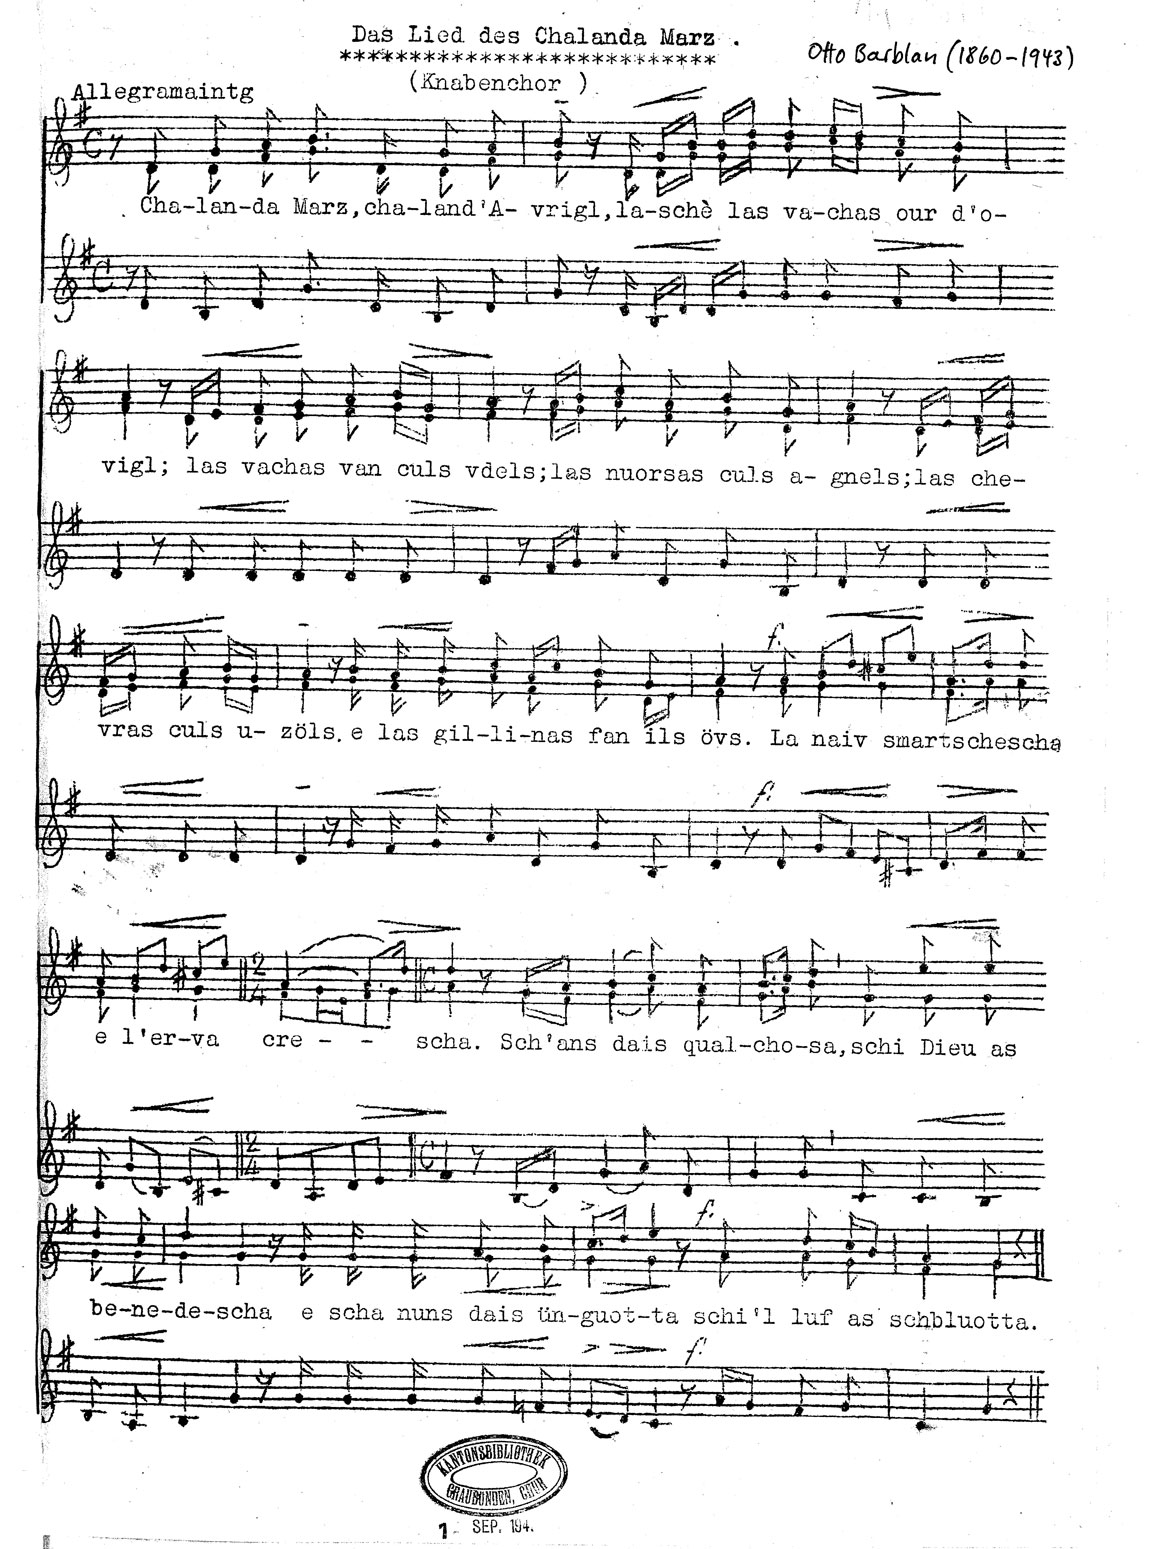 Une chanson de Chalandamarz de Otto Barblan © Kantonsbibliothek Graubünden